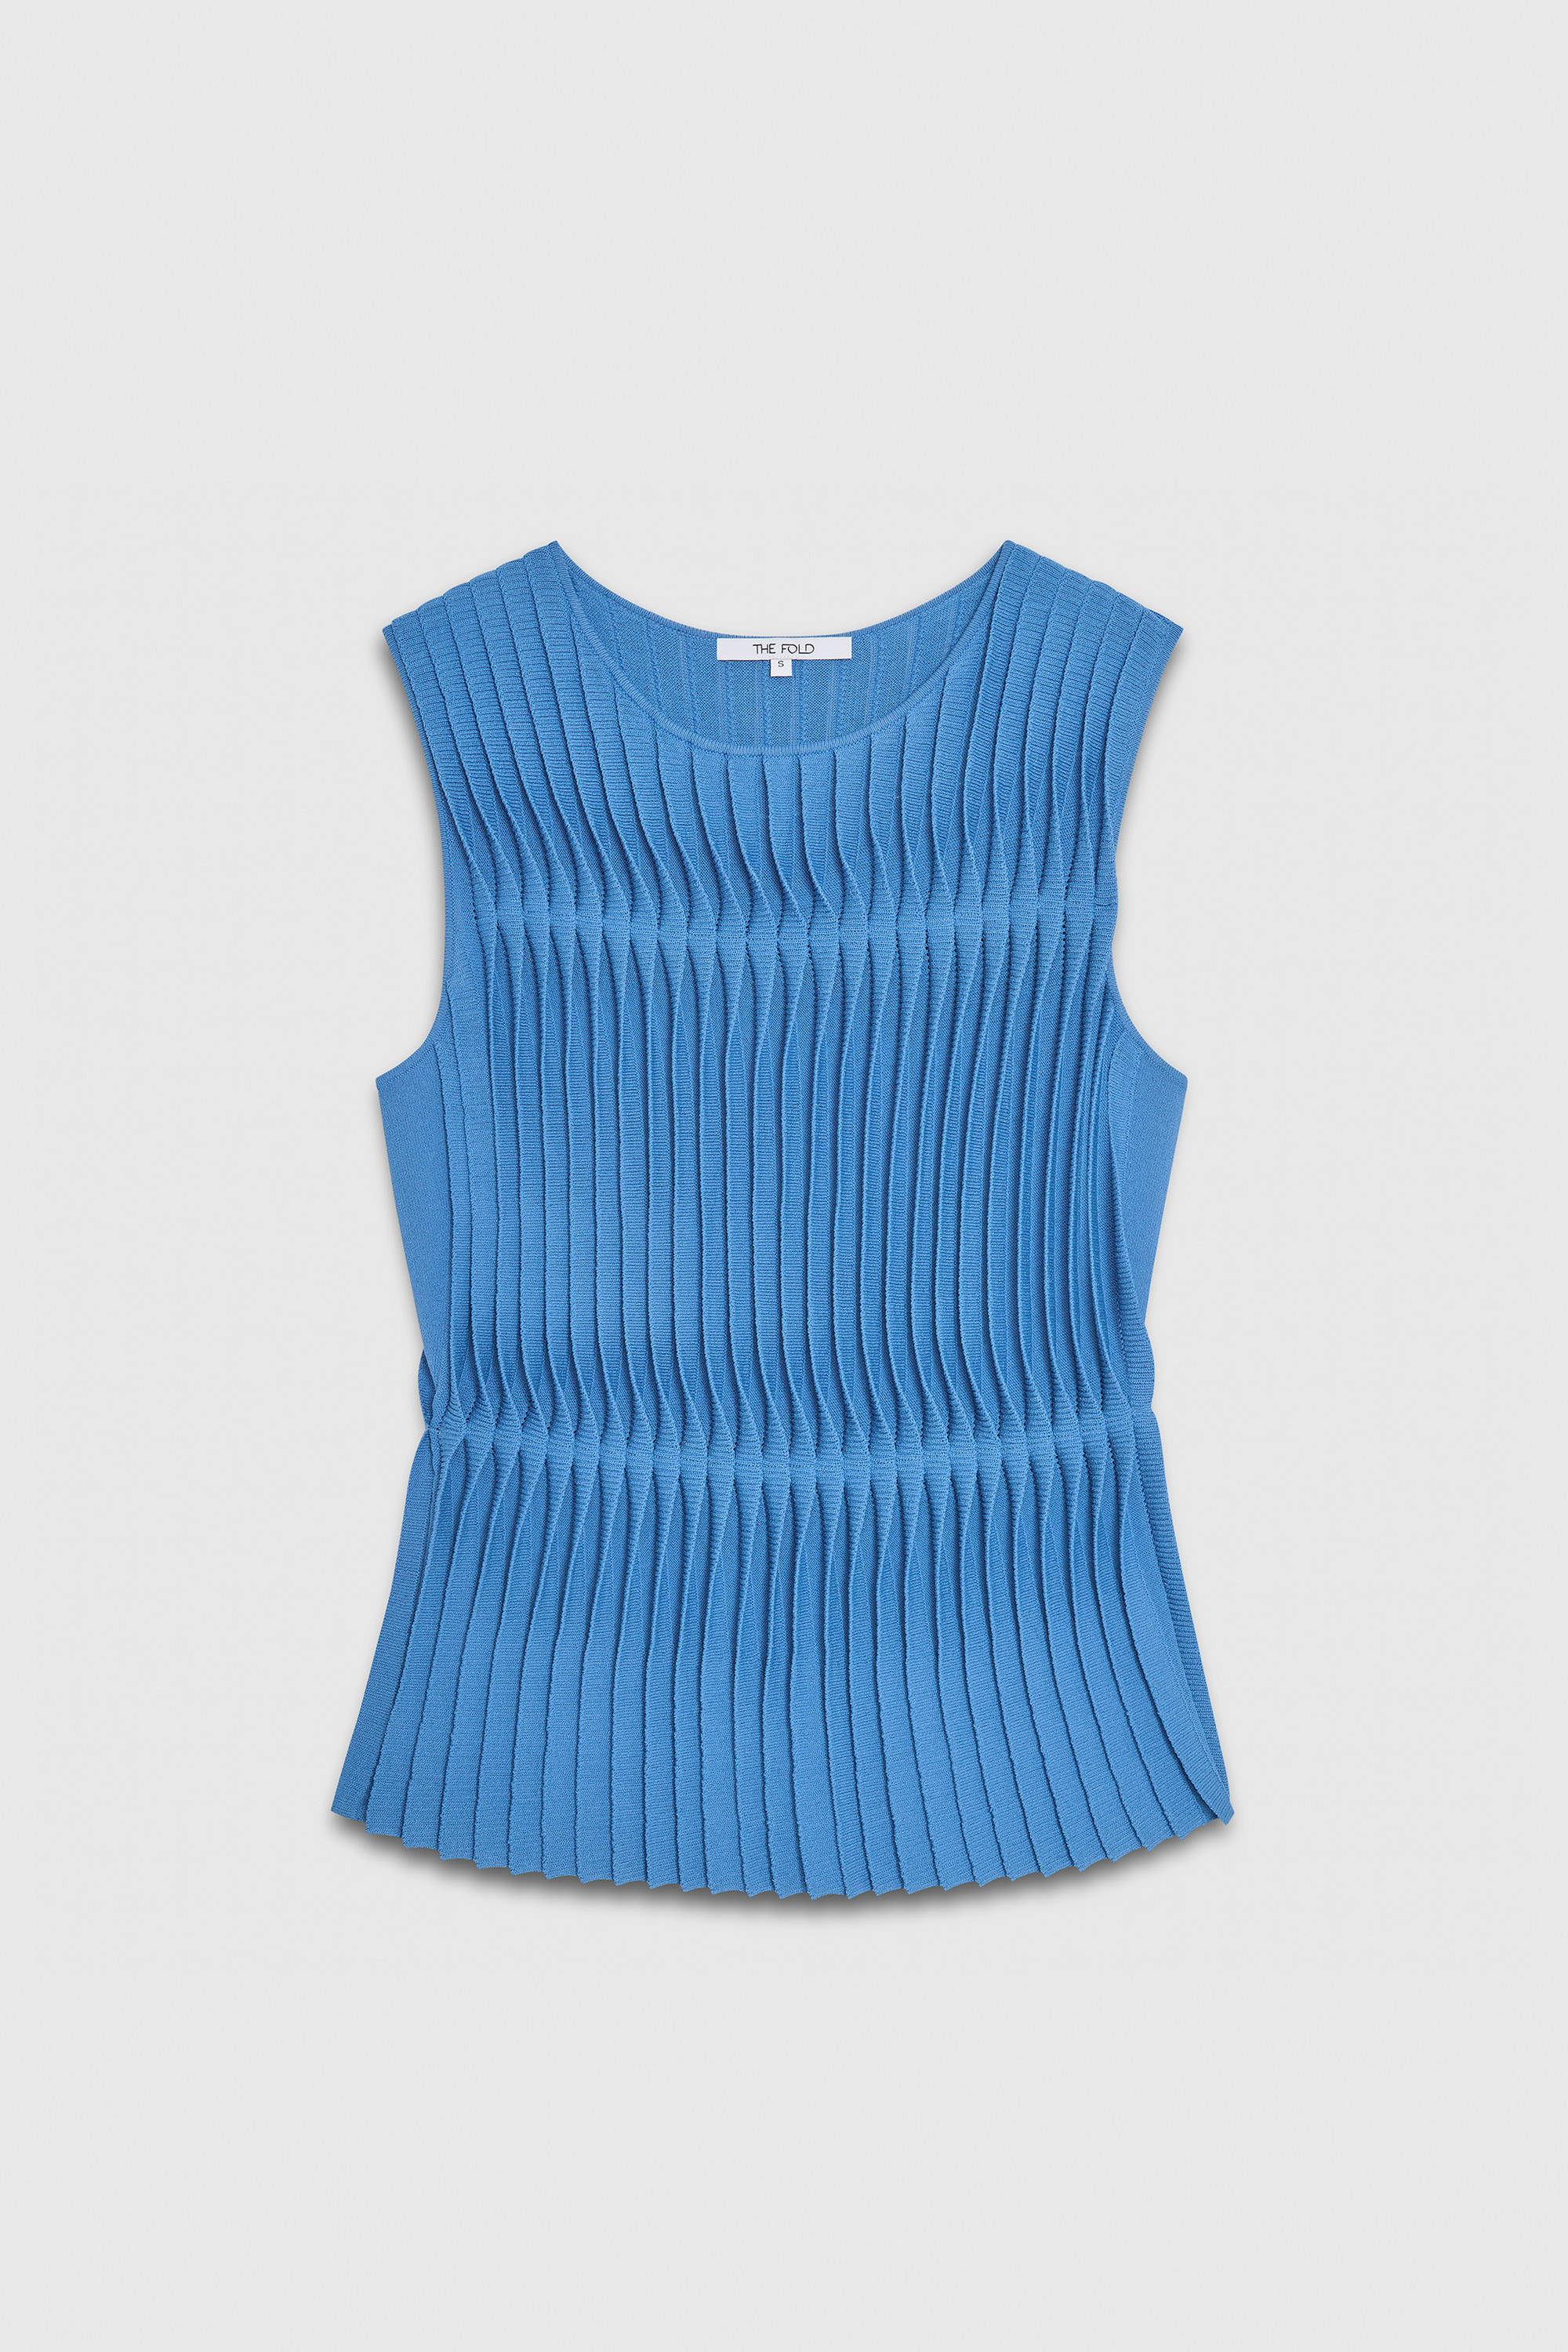 Allegra Top Cornflower Blue Stretch Knit - Welcome to the Fold LTD